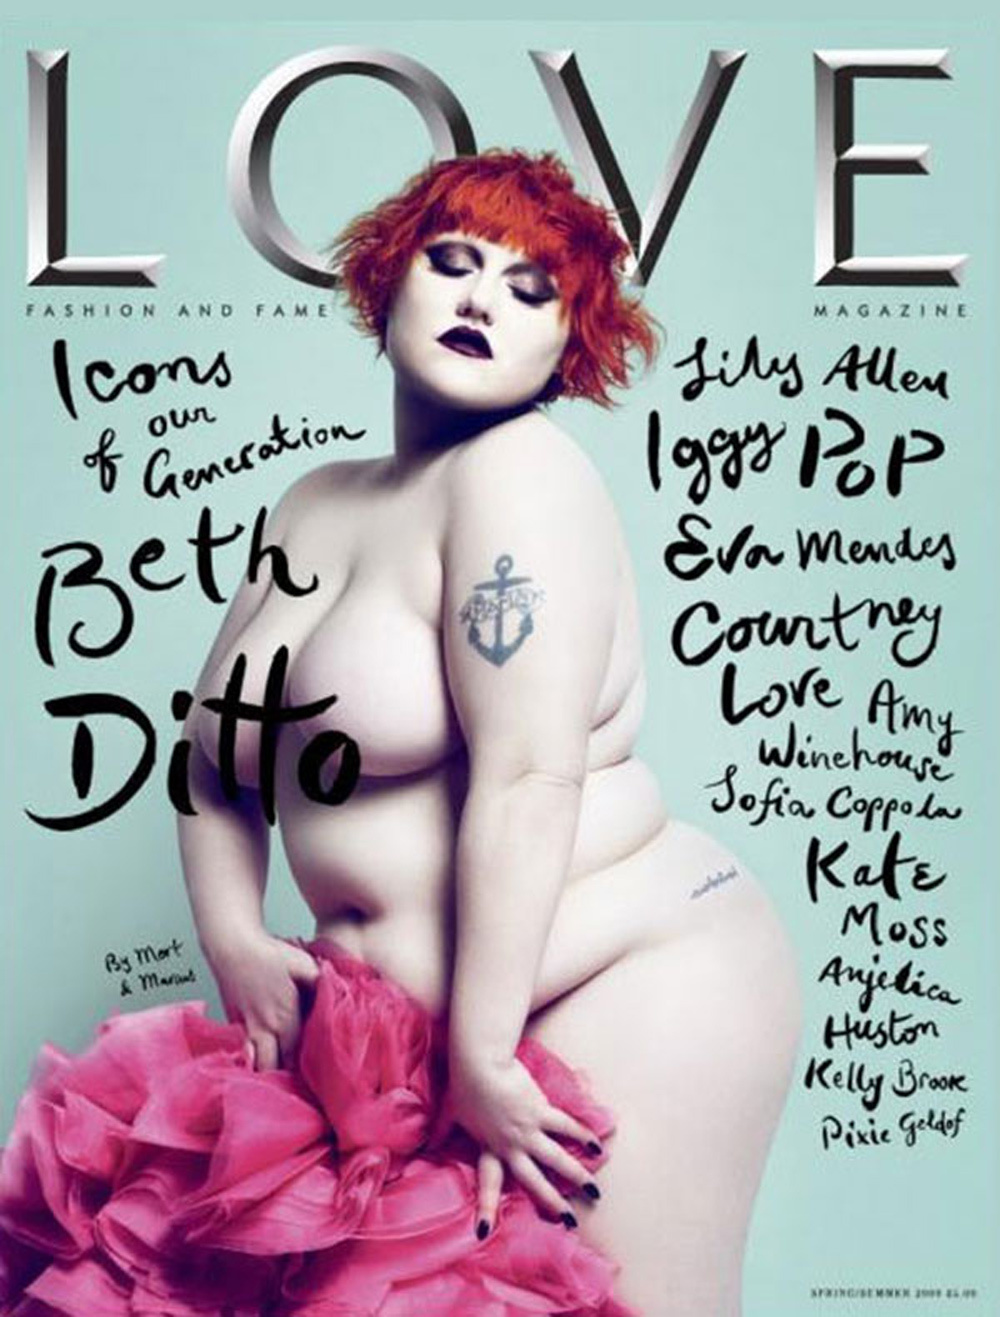 italian magazines topless women